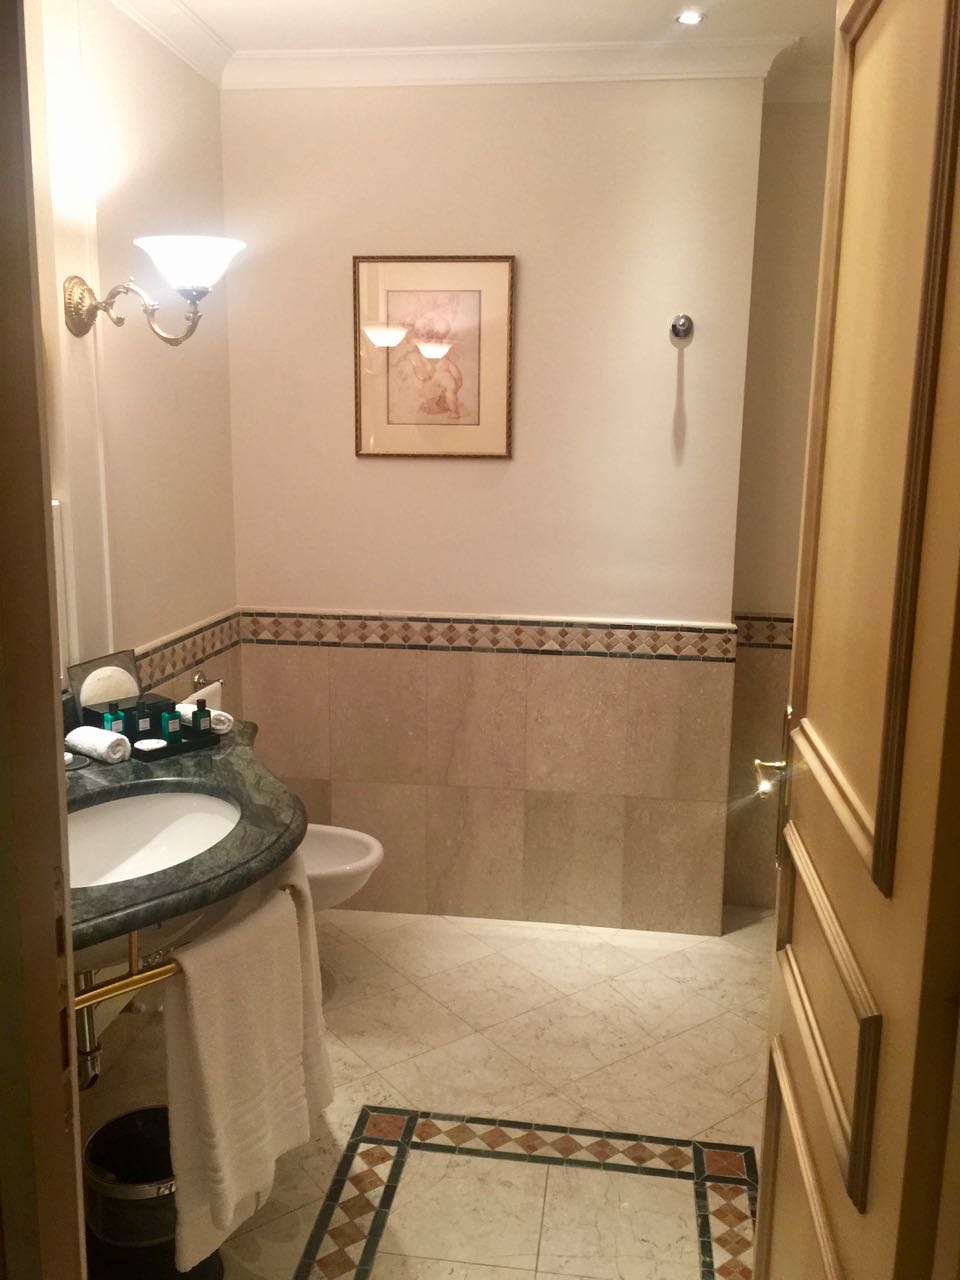 Sofitel Rome | View into Bathroom.jpg